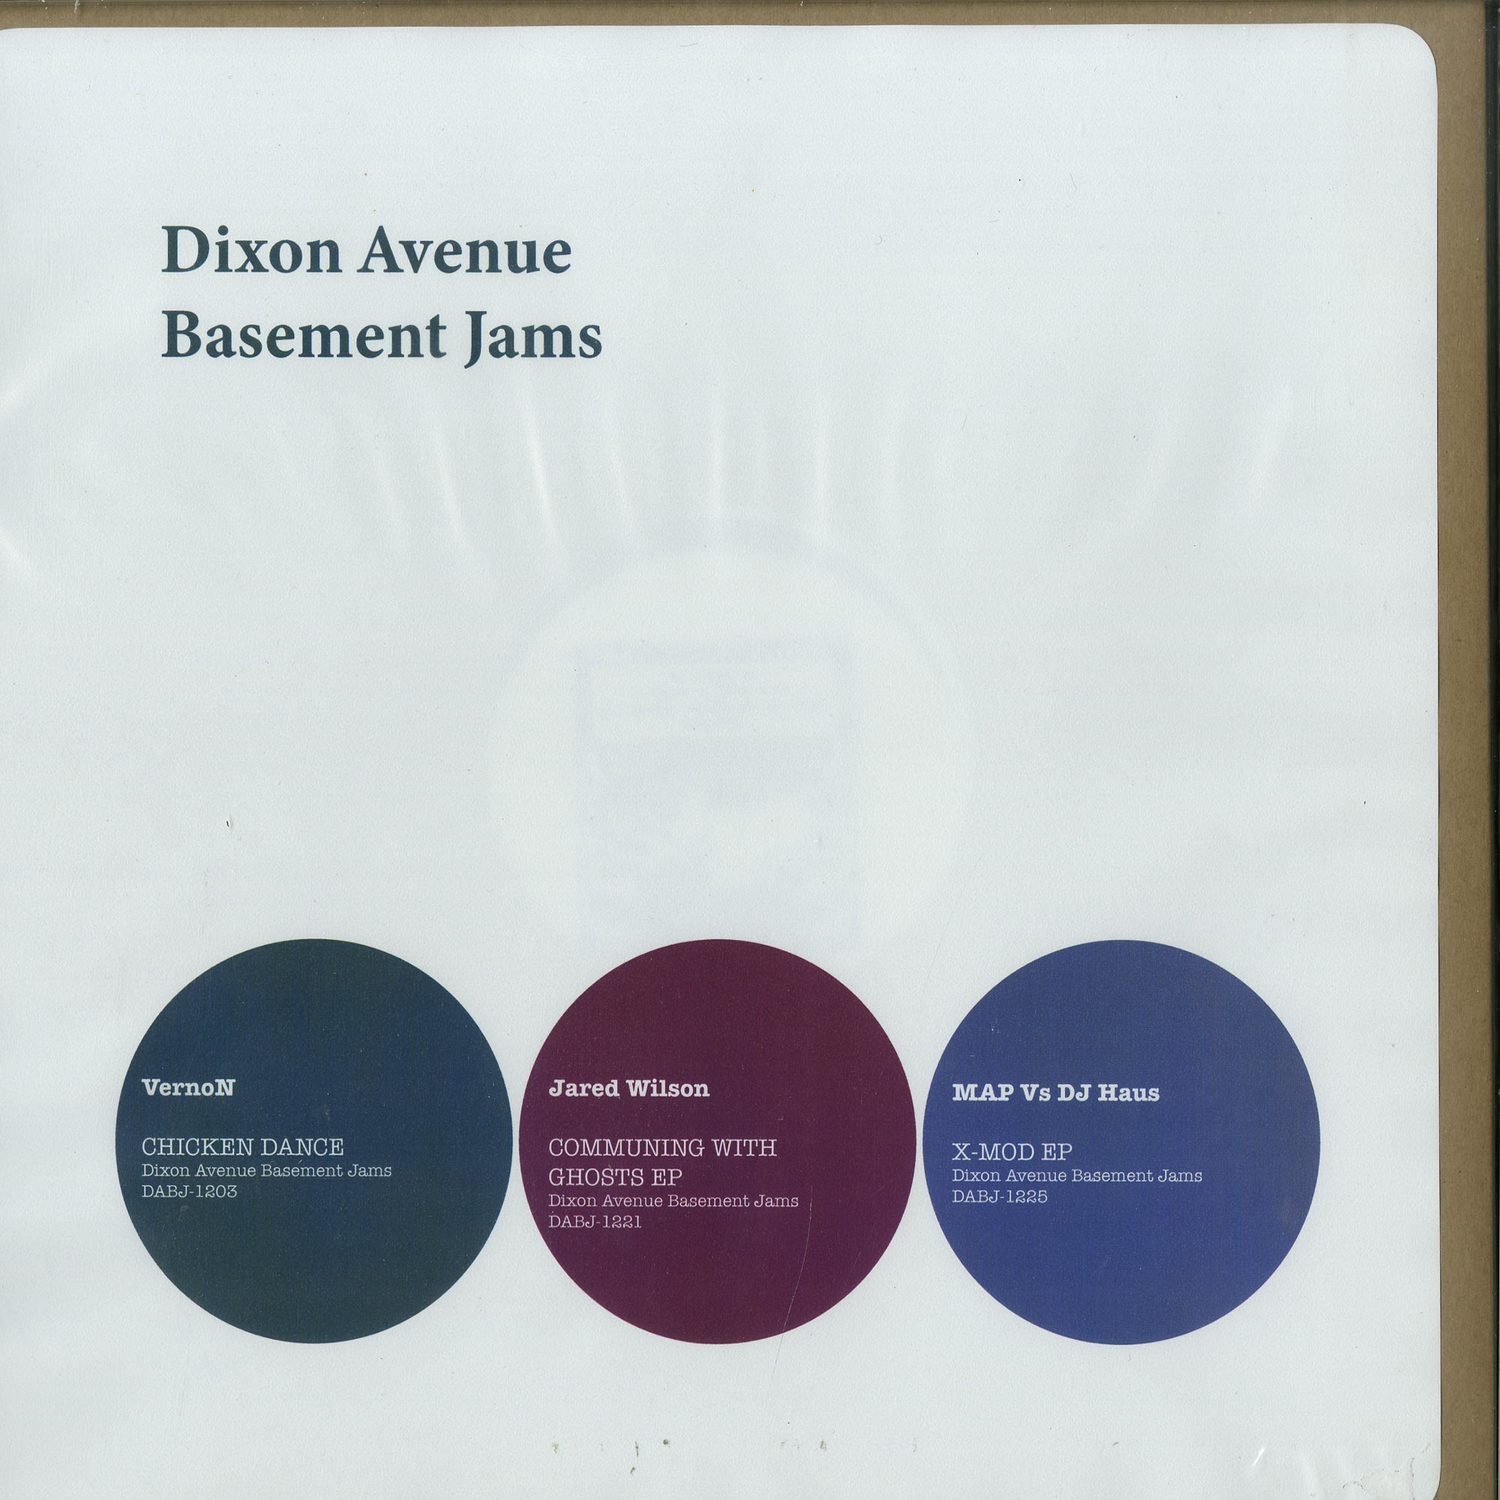 Vernon, Jared Wilson, MAP vs DJ Haus - DIXON AVENUE BASEMENT JAMS SALES PACK 